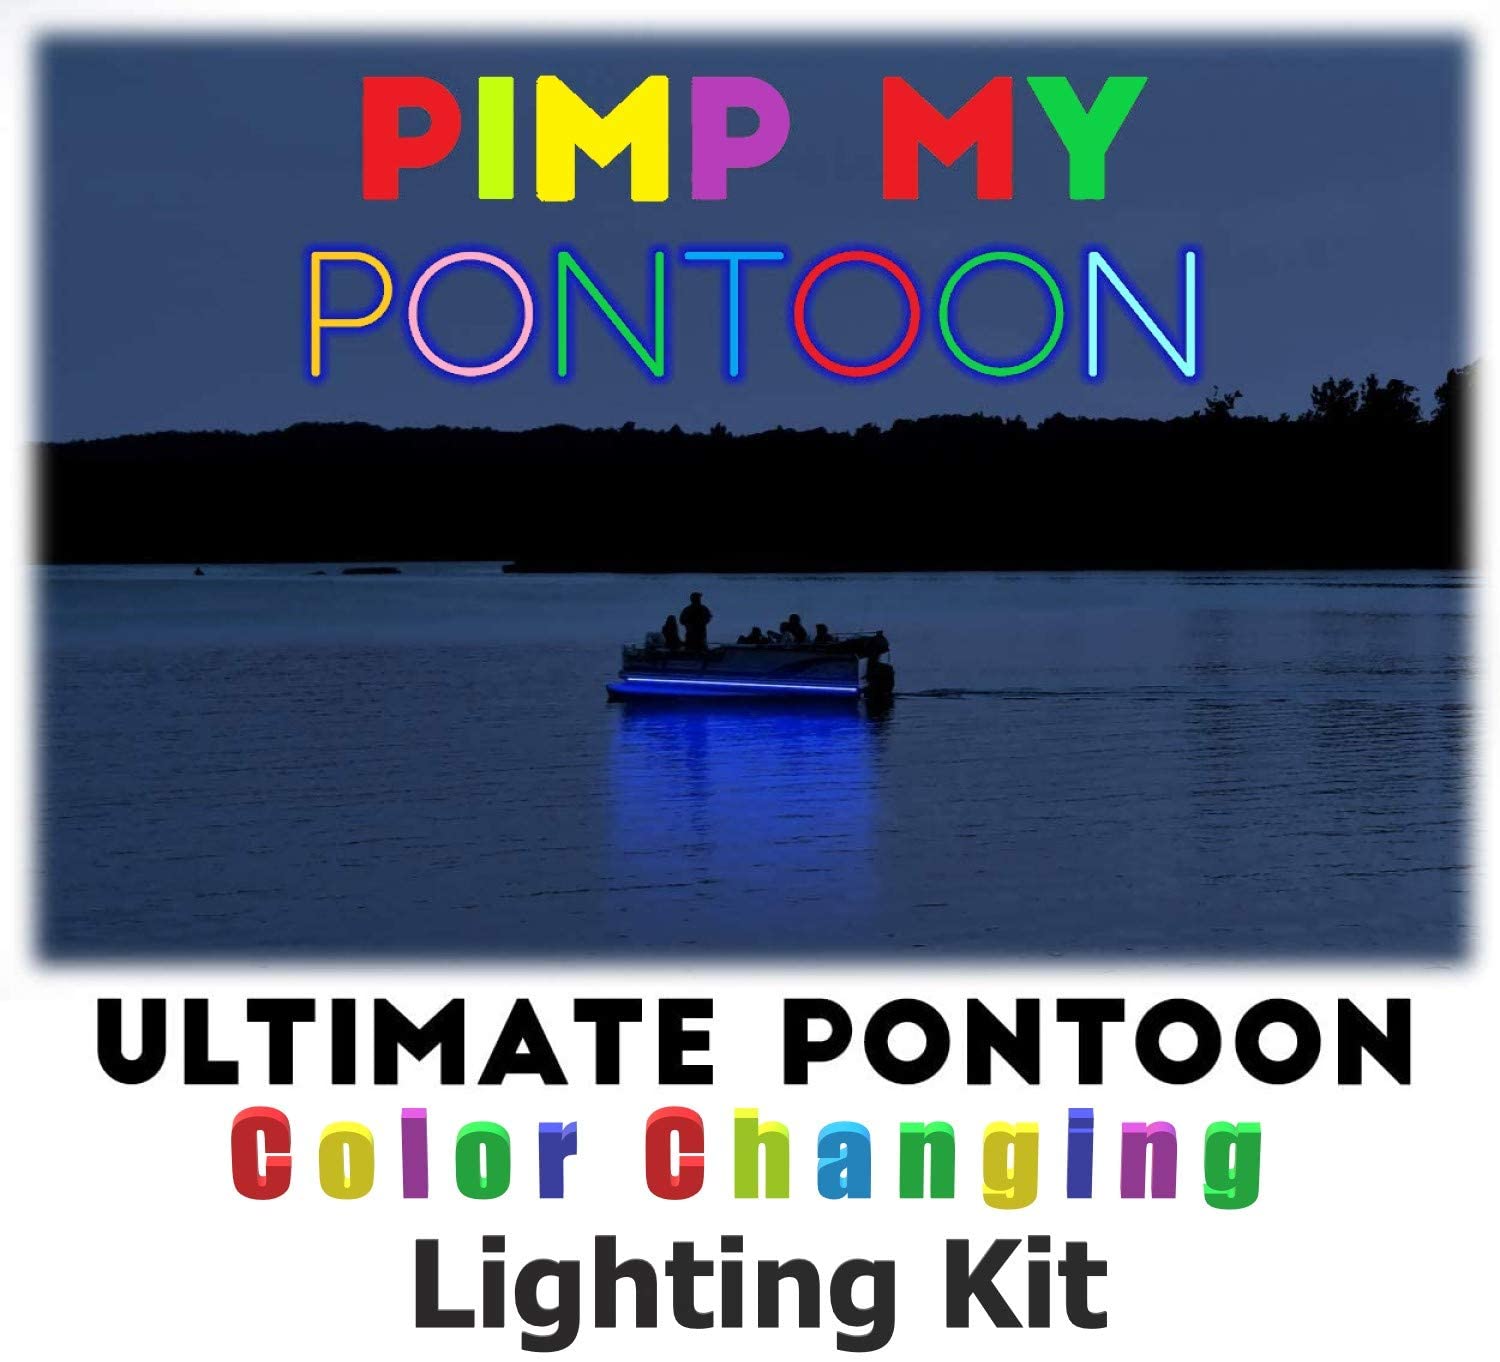 Pimp My Pontoon Multi-Color LED Under Deck Lighting DIY Complete Kit 30000 Lumens, Includes Bonus Red & Green Navigation Lights Pimp My Pontoon Green Blob Outdoors 19ft per roll 